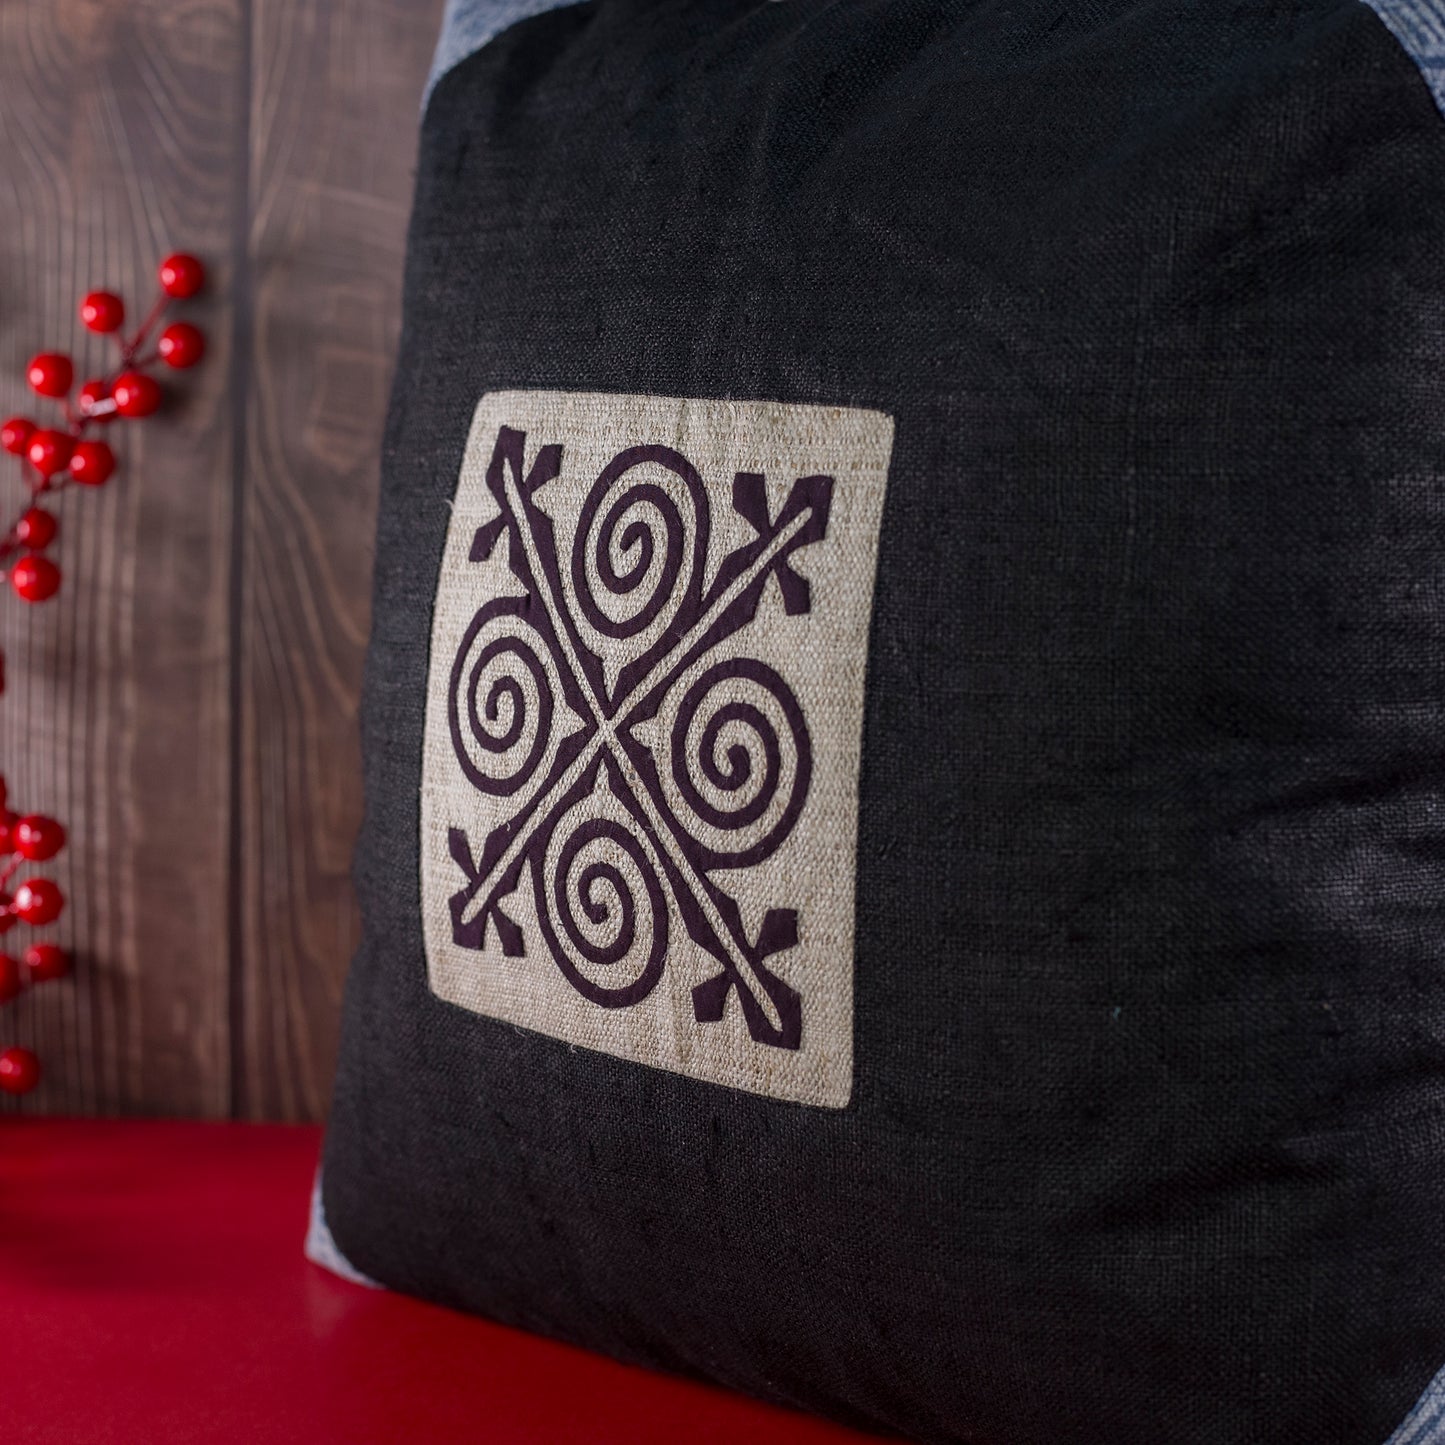 Black hemp Cushion Cover, beeswax batik corner, white hand-embroidered patch